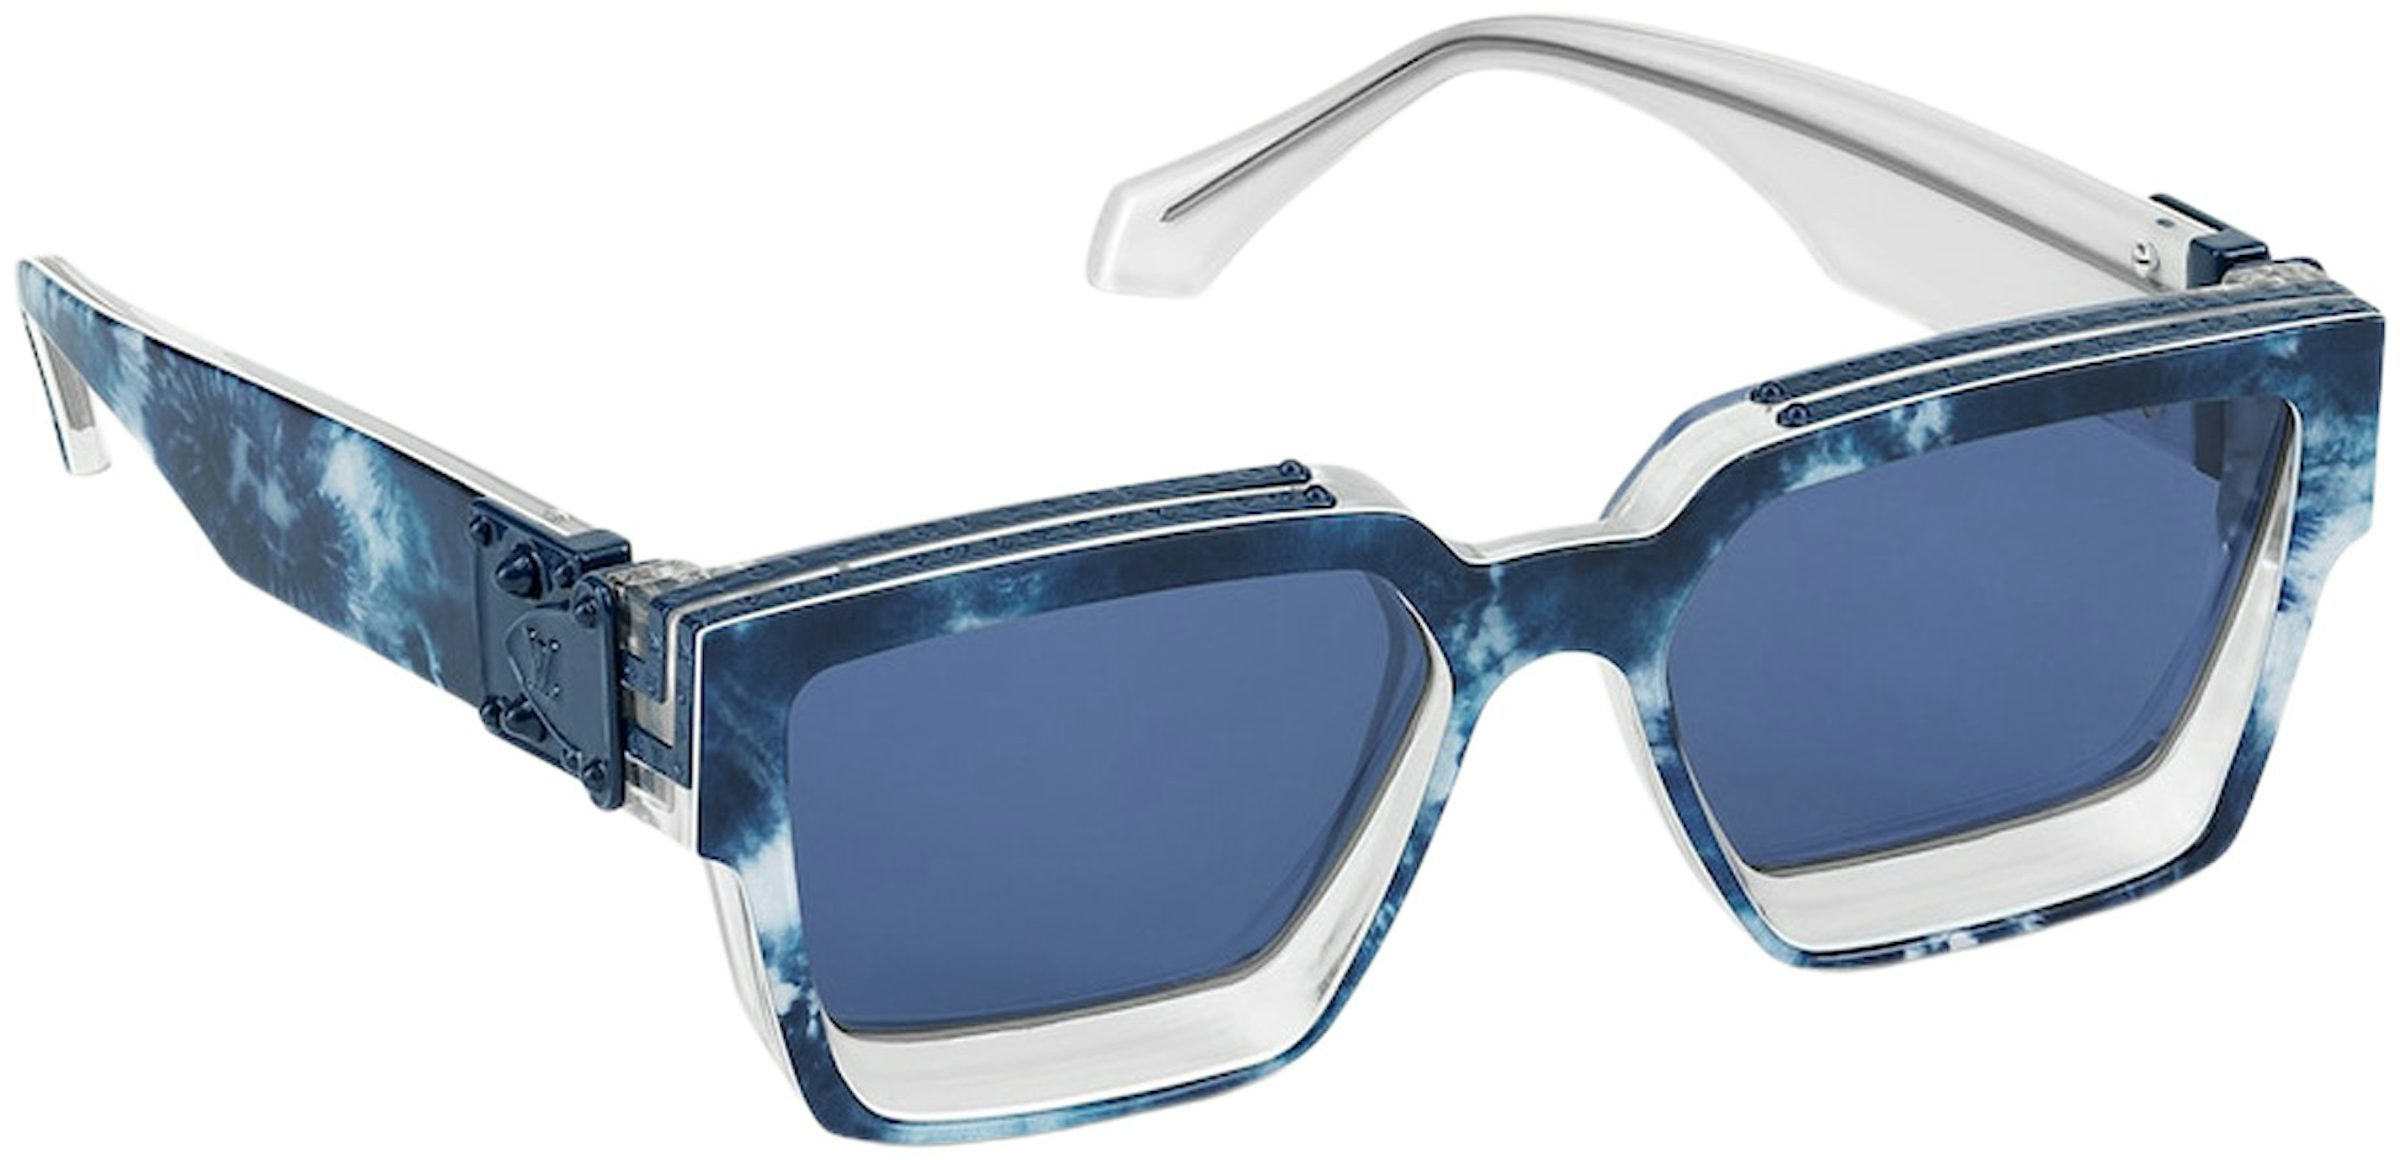 Louis Vuitton, Accessories, Louis Vuitton Waimea Navy Blue Sunglasses